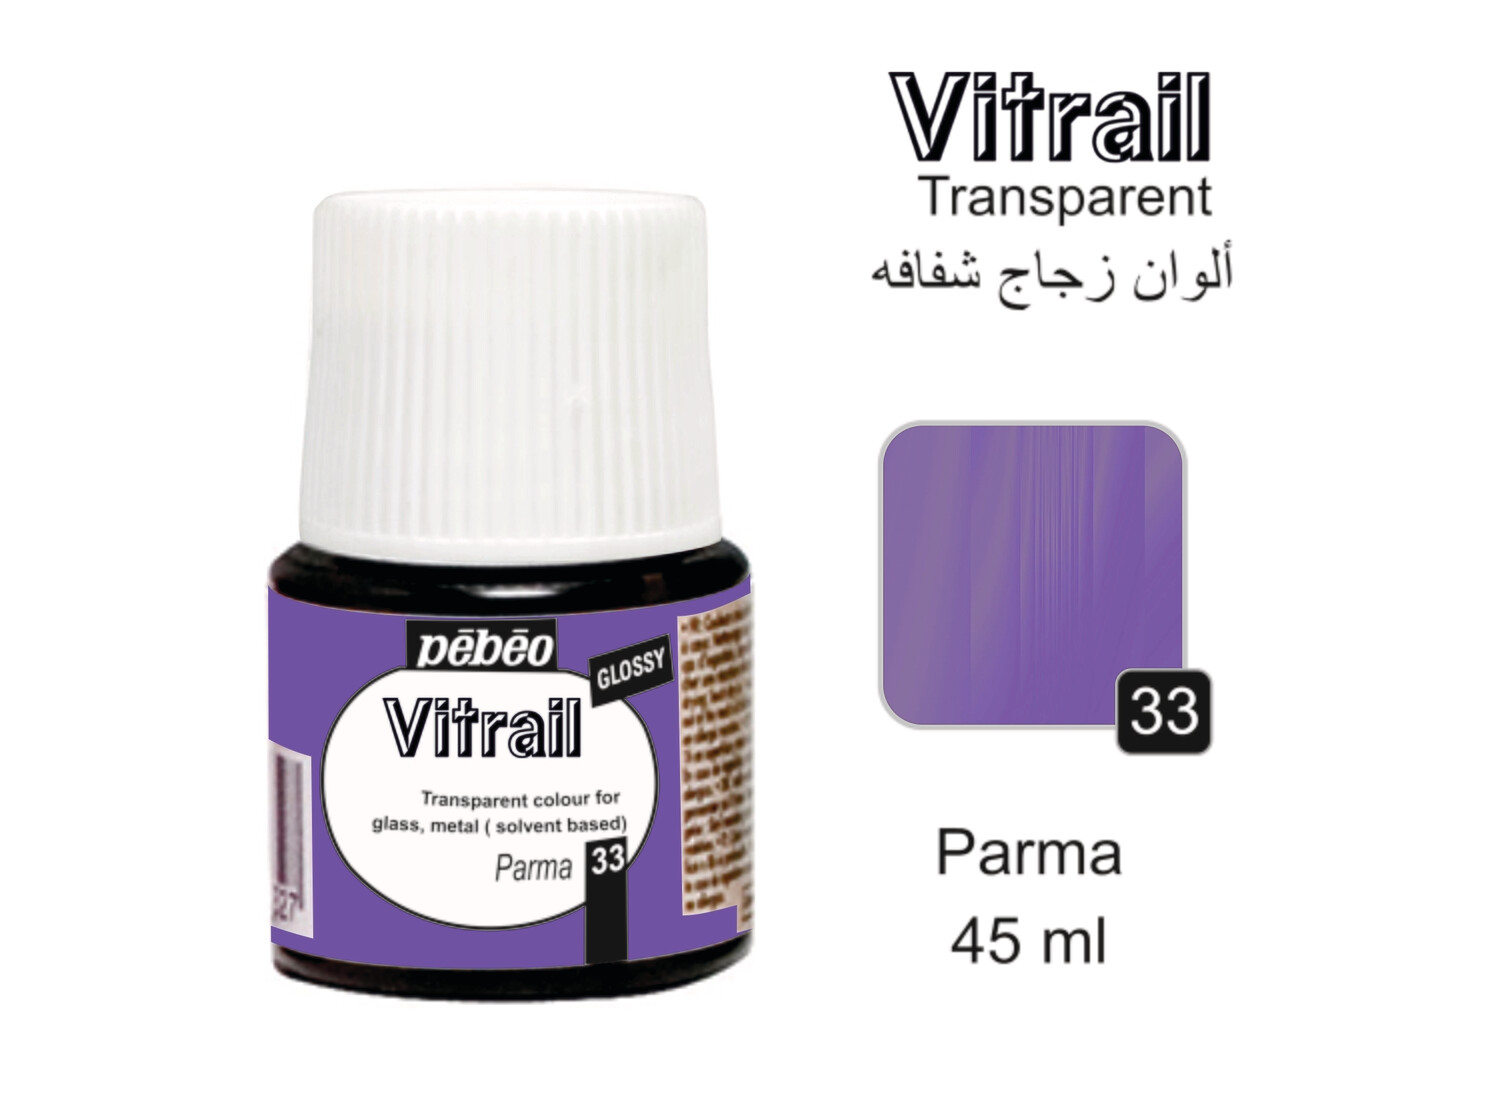 VITRAIL glass colors Parma No. 33, 45 ml